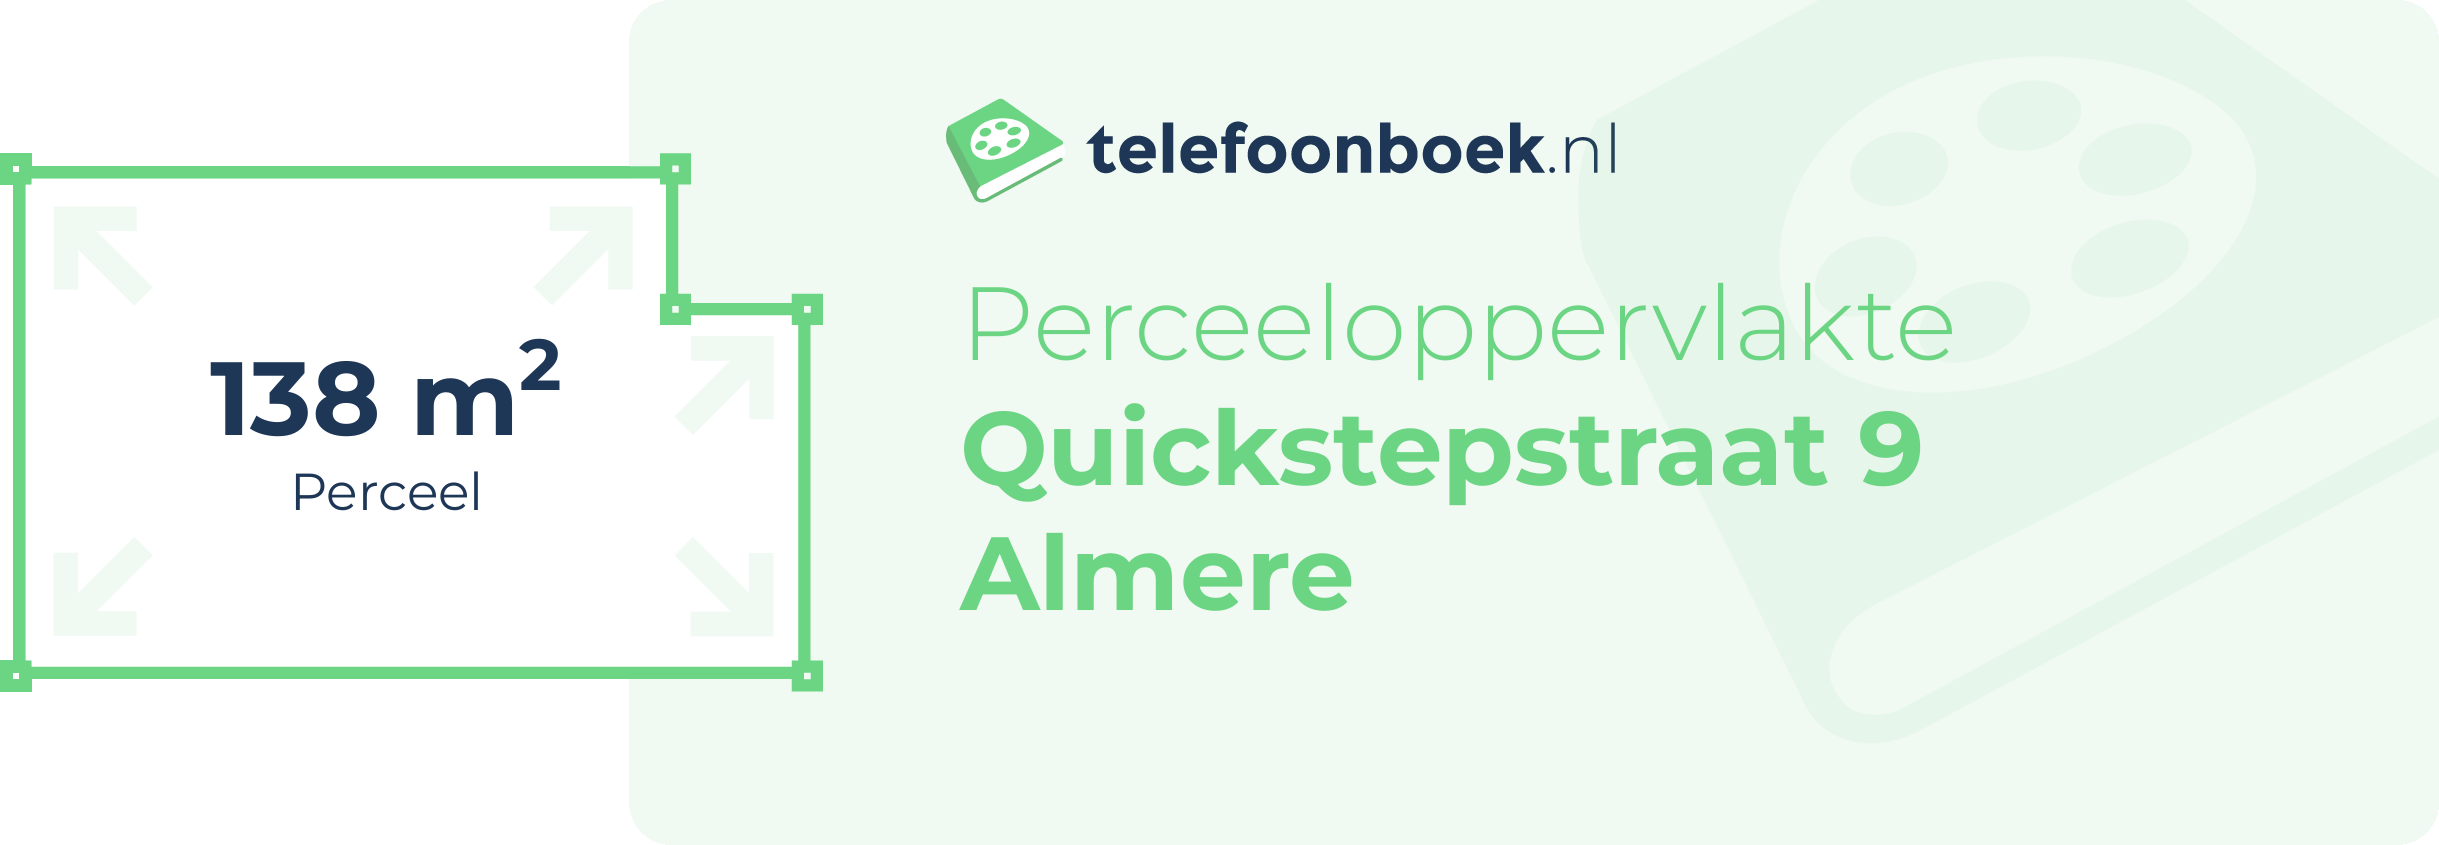 Perceeloppervlakte Quickstepstraat 9 Almere